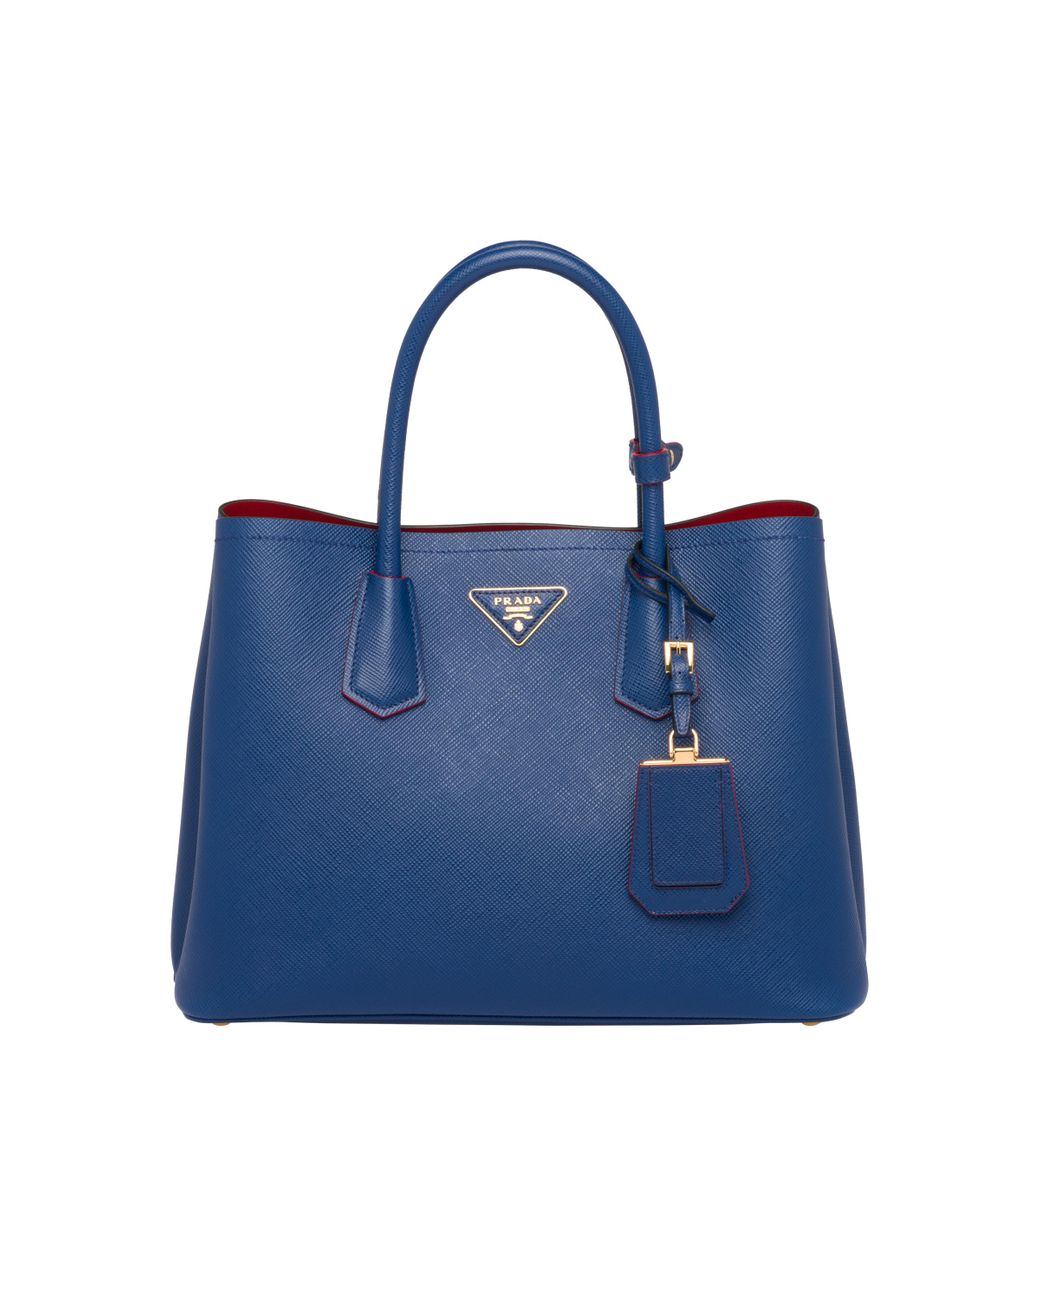 Prada Medium Saffiano Leather Double Bag in Blue - Lyst